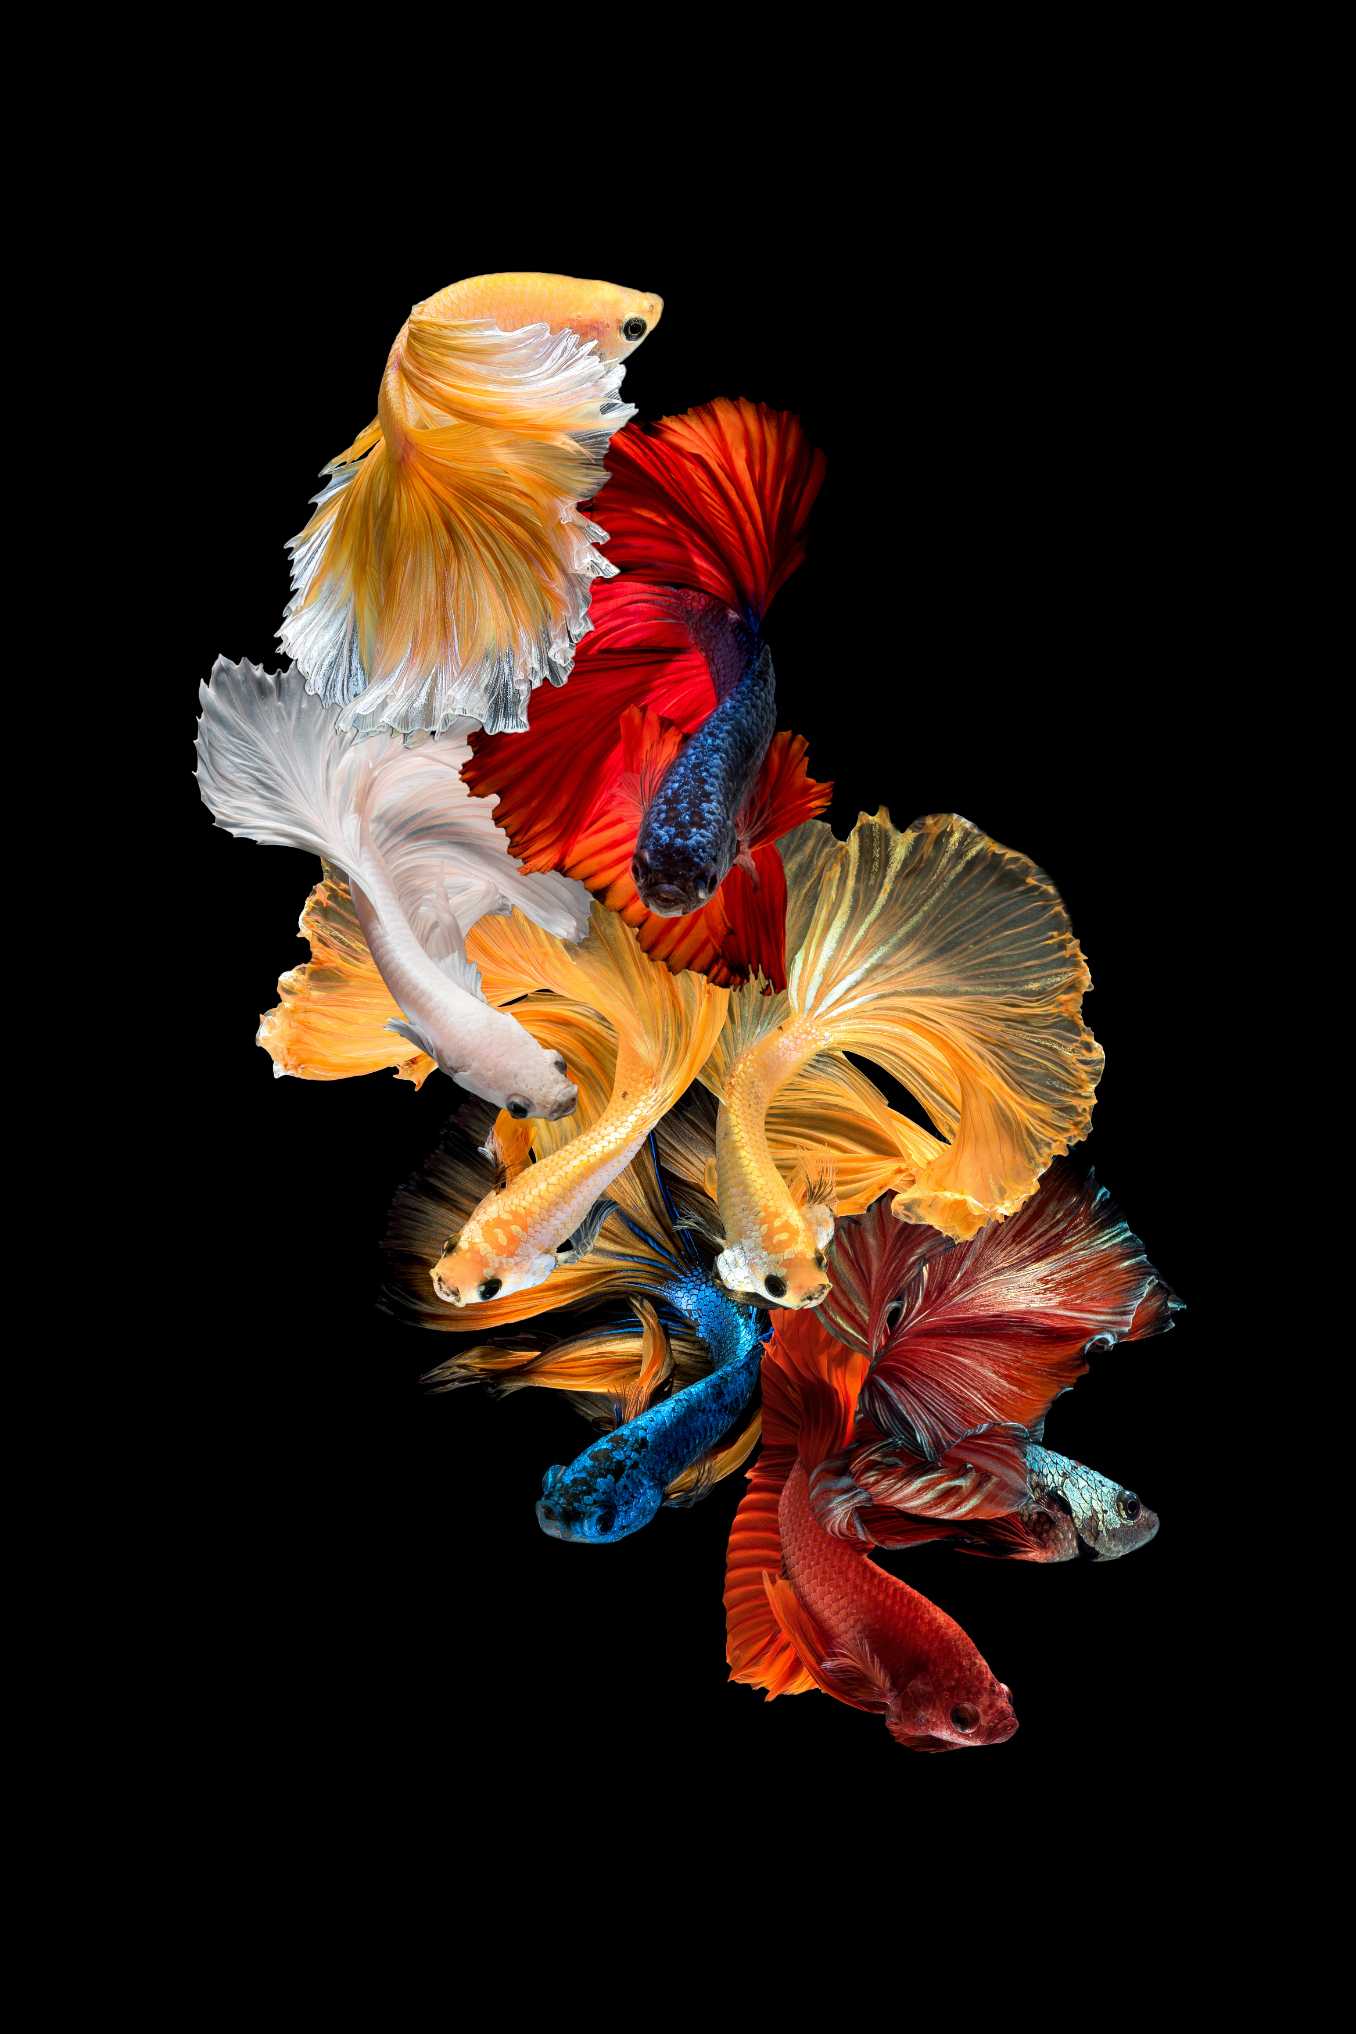 Fish Photography Print - ArtSmiley